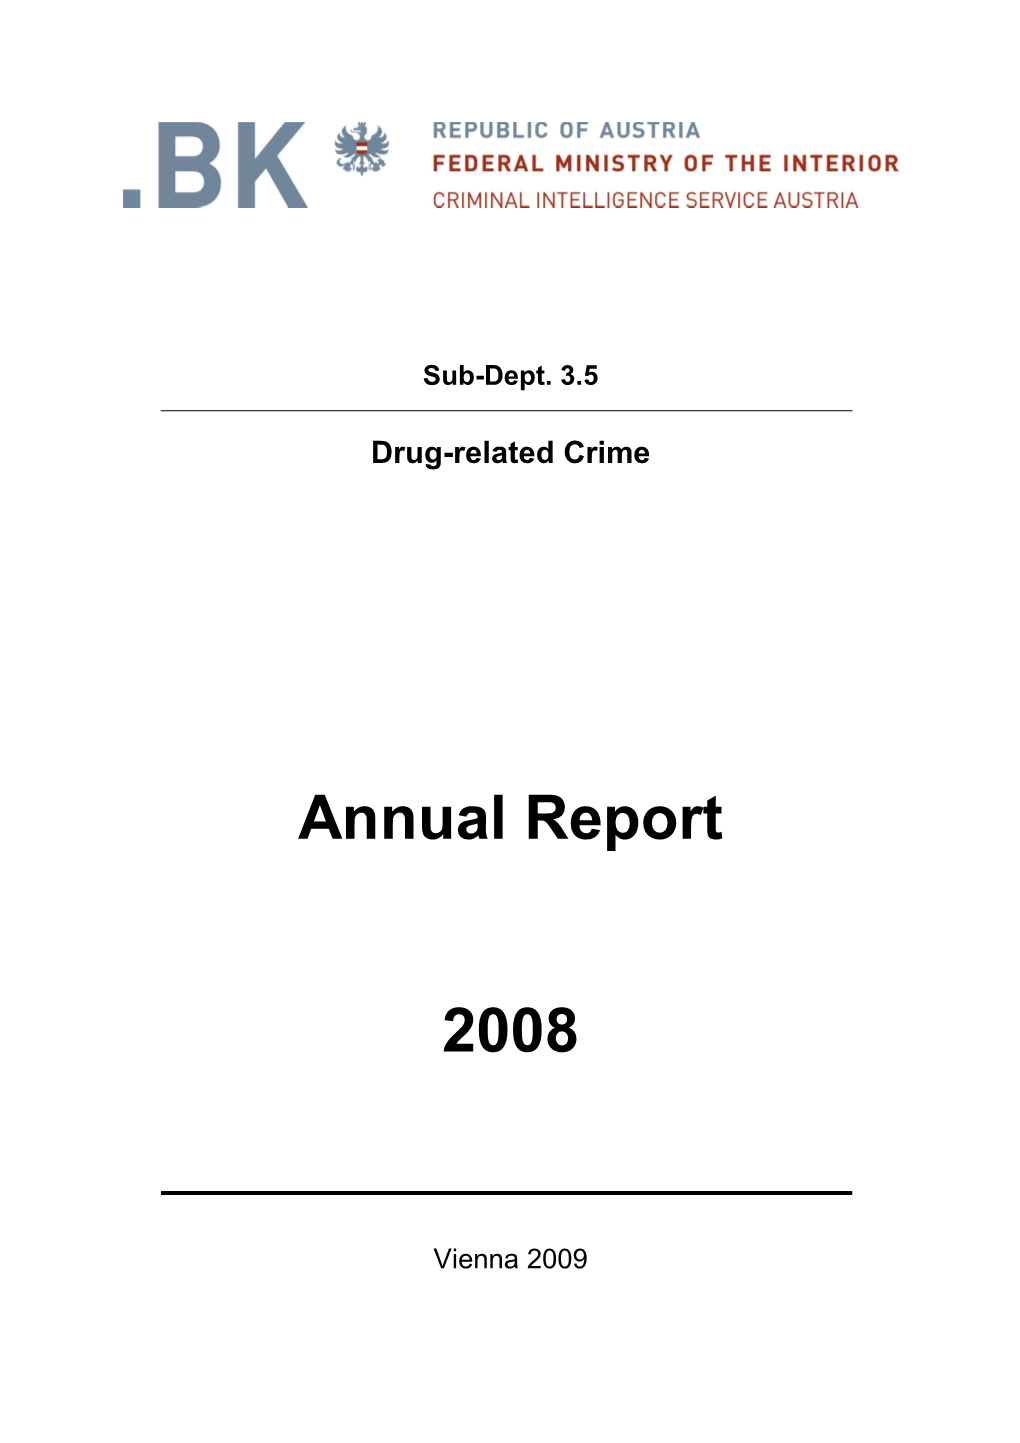 Sub-Dept. 3.5 Drug-Related Crime Annual Report 2008